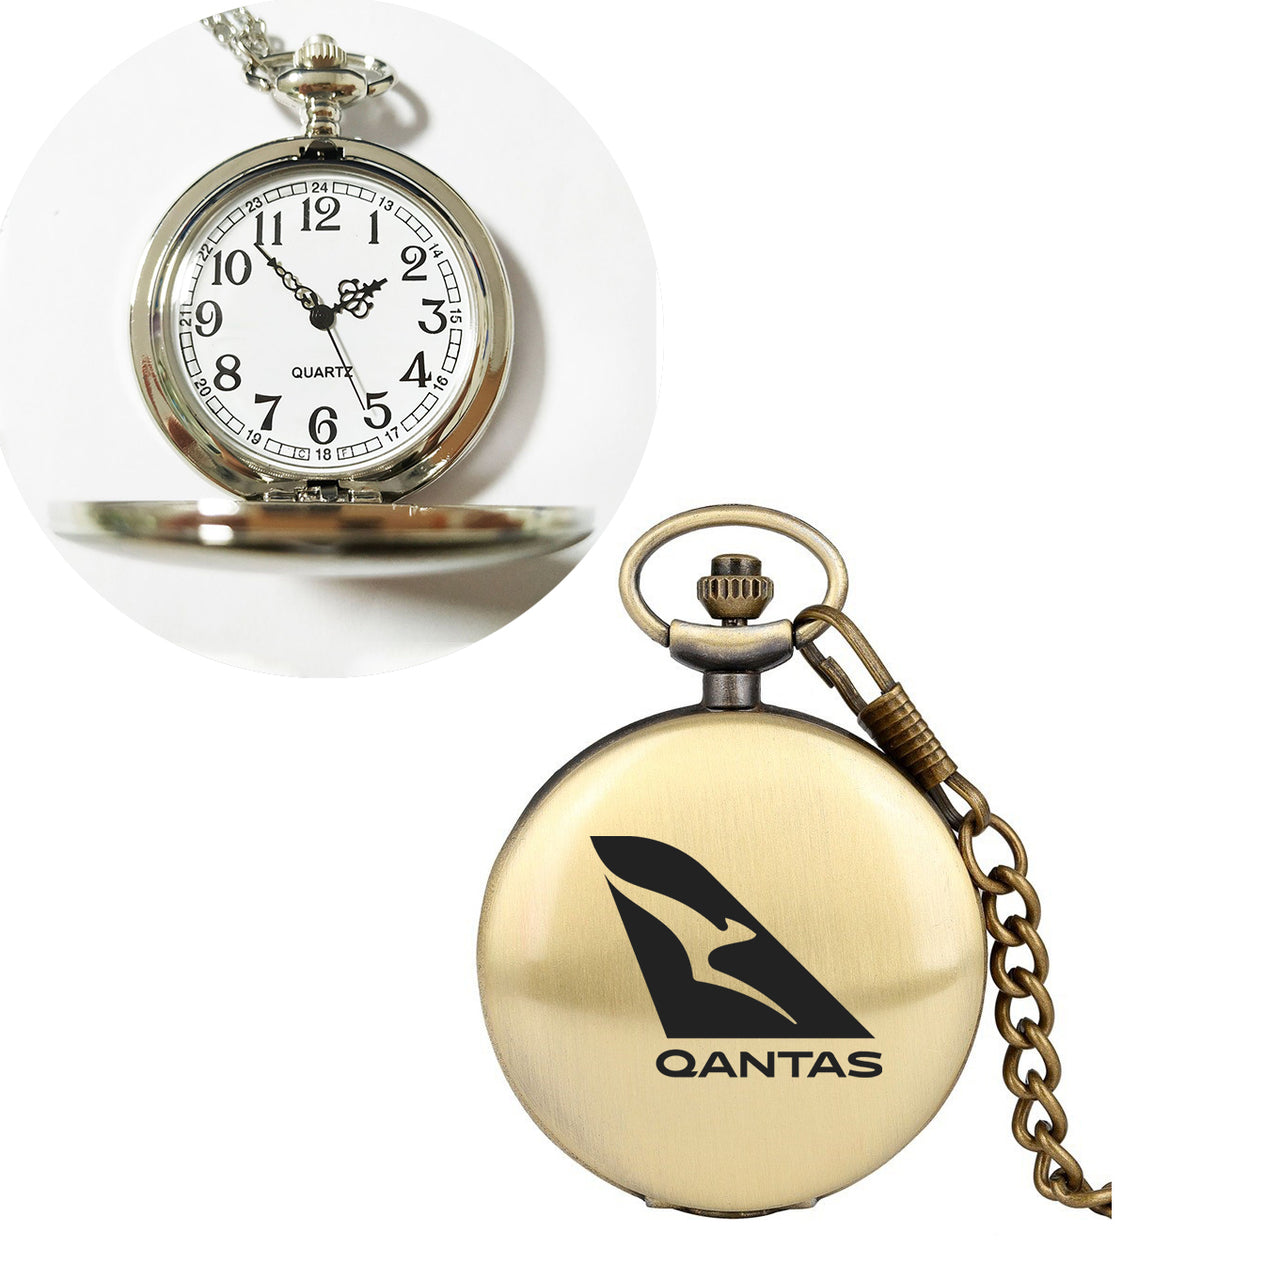 Qantas Airways Airlines Designed Pocket Watches